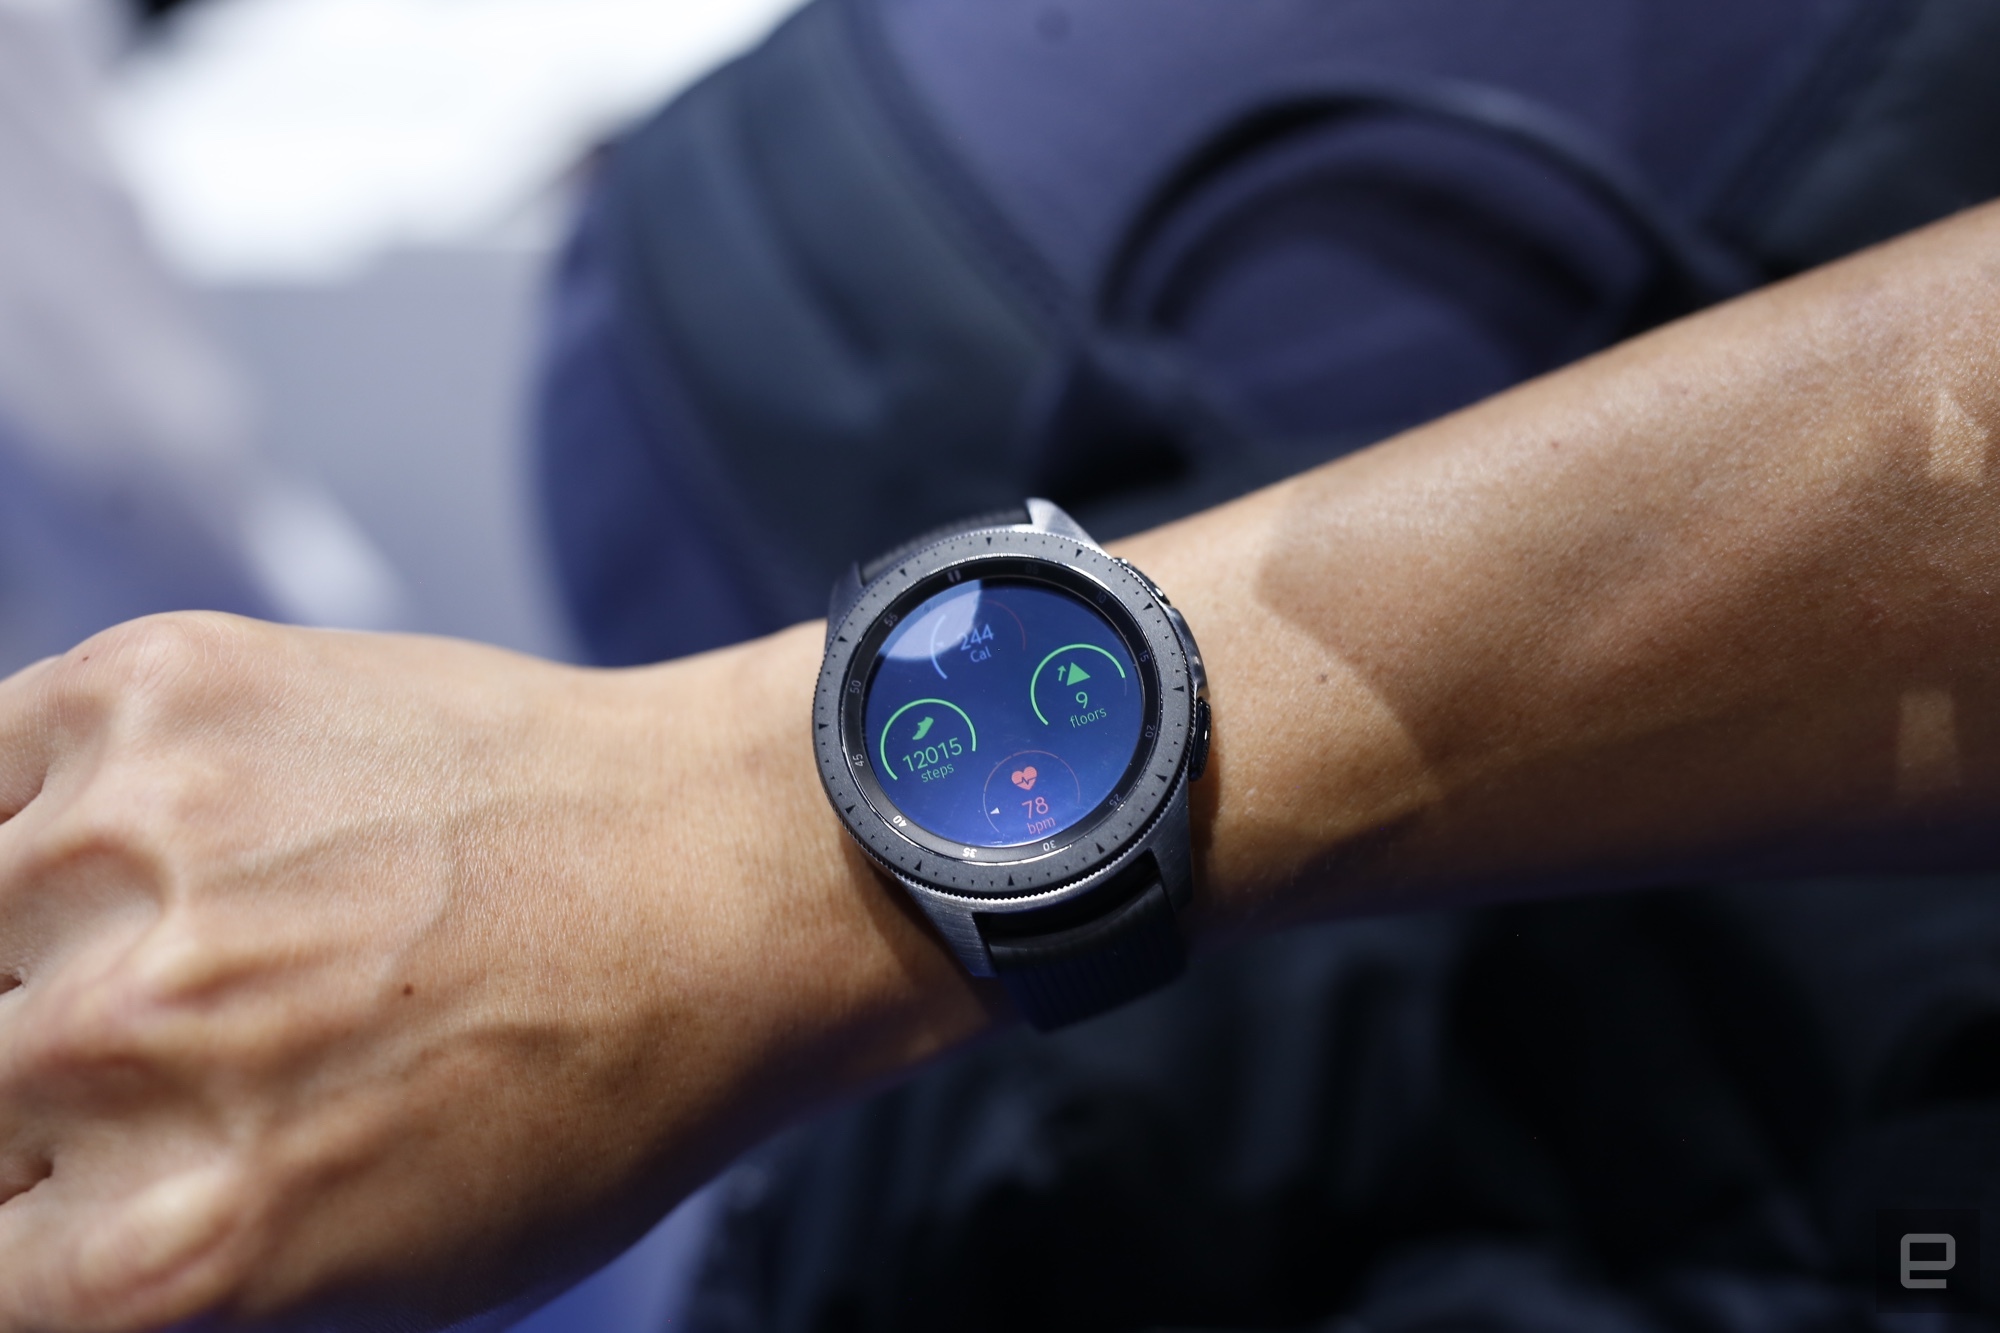 Samsung galaxy watch дата. Часы самсунг Galaxy 42mm. Умные часы Samsung Galaxy watch 42mm. Galaxy watch 42mm (2018). Samsung Galaxy watch 42mm на руке.